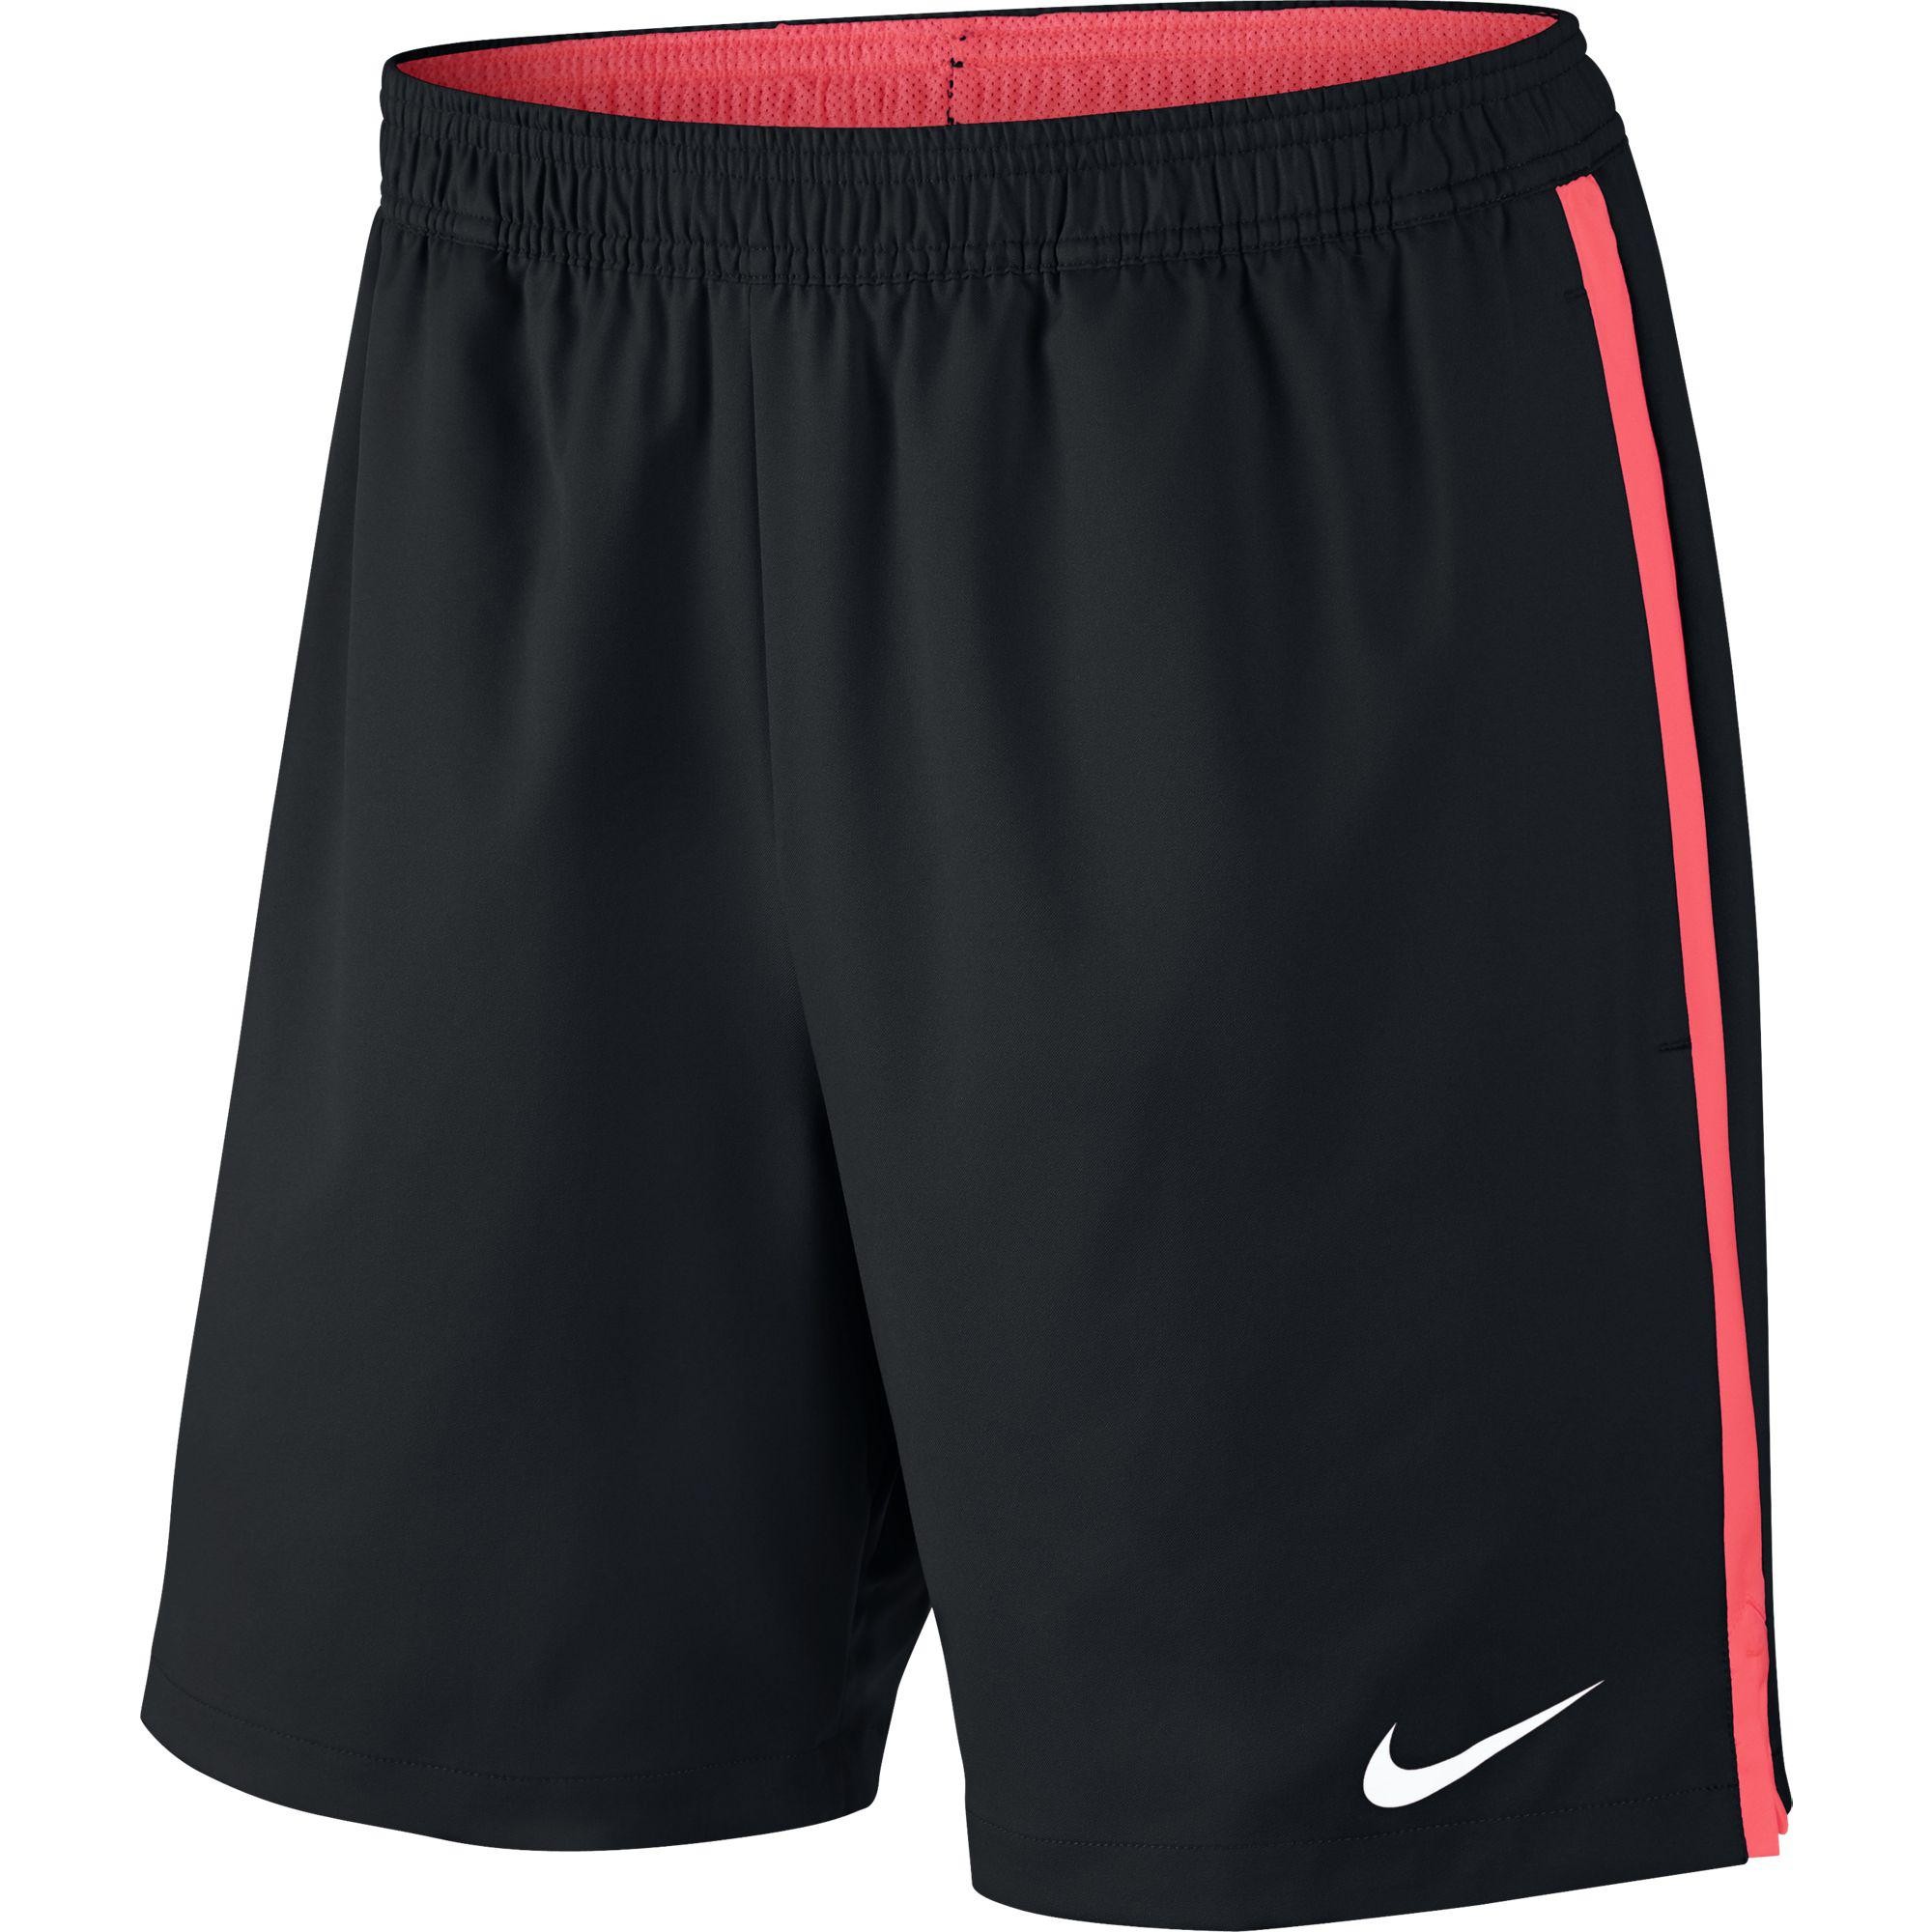 Pánské tenisové šortky Nike Court 7" black/hot lavaXL